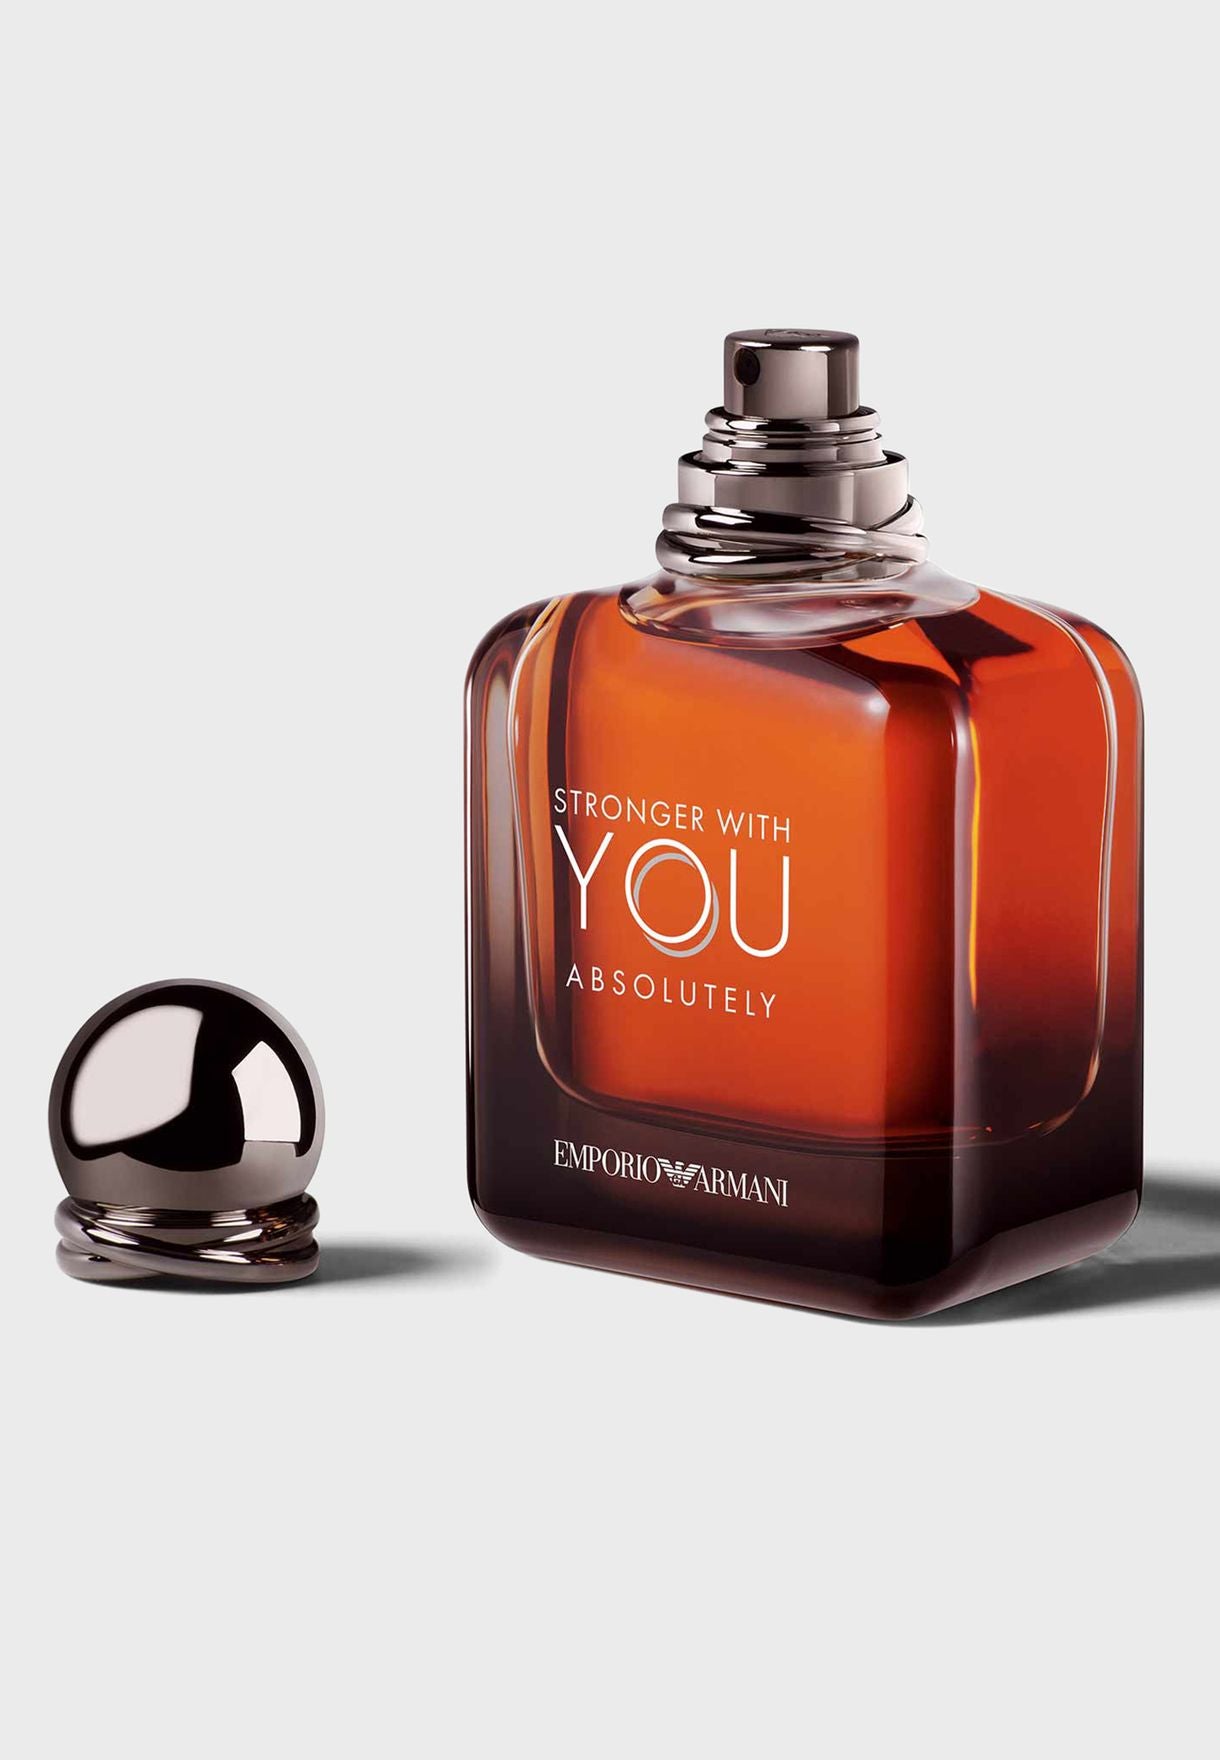 Giorgio Armani Stronger With You Absolutely Eau De Parfum 100ML